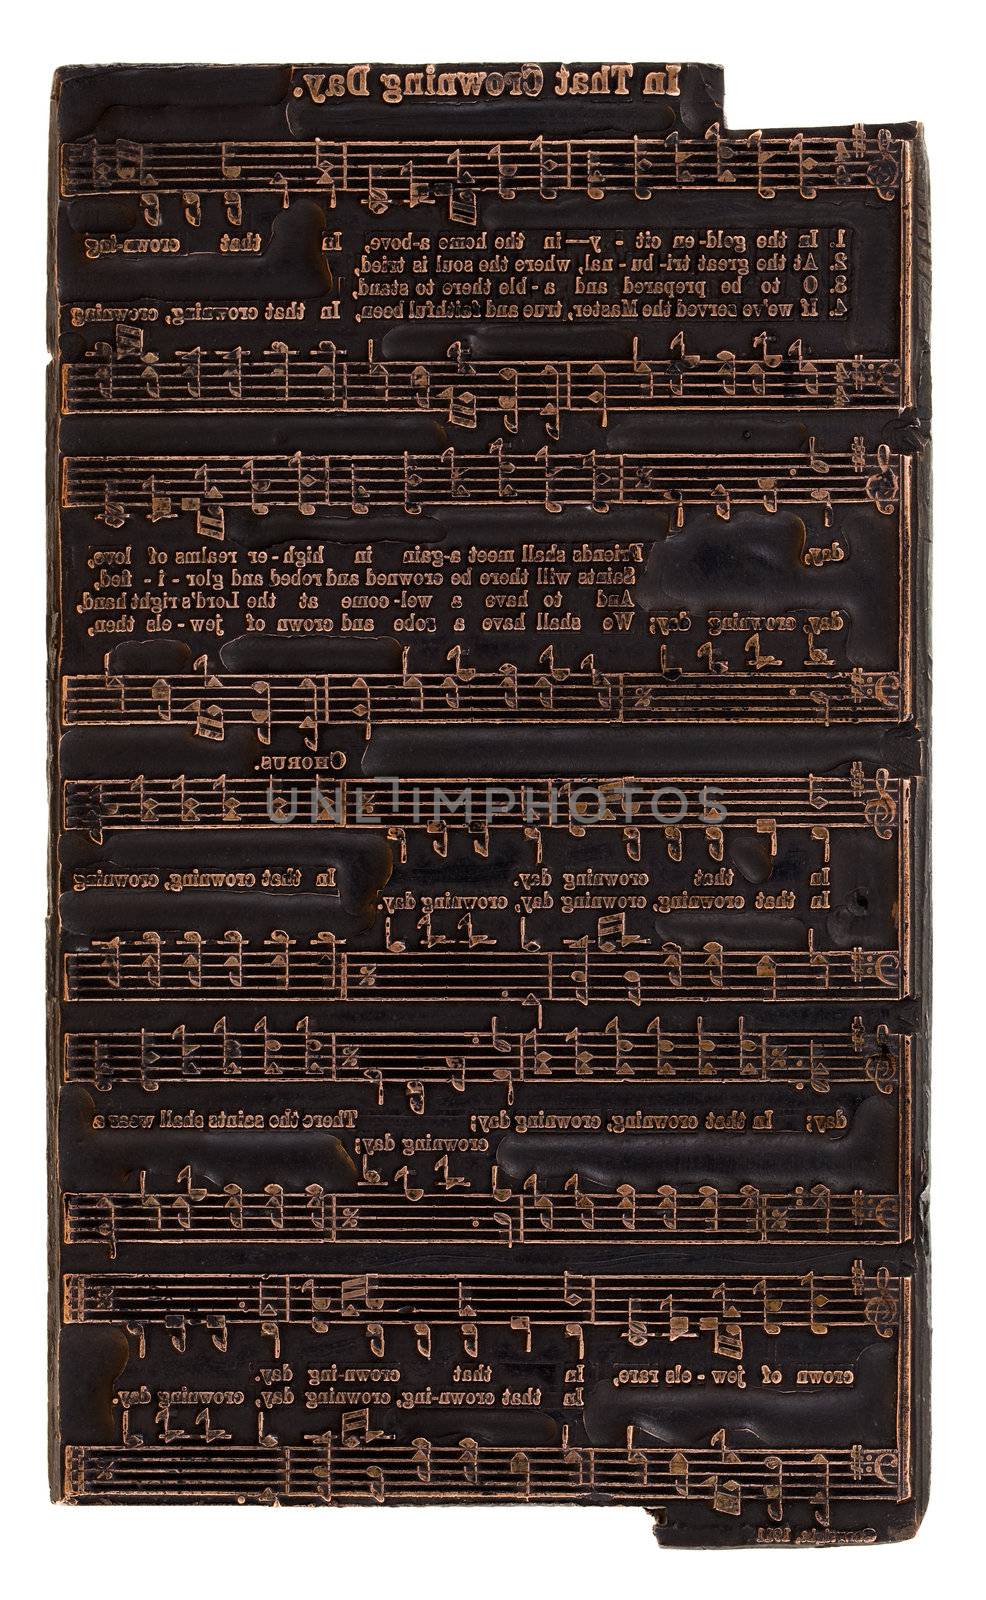 letterpress printer electrotype music plate by PixelsAway